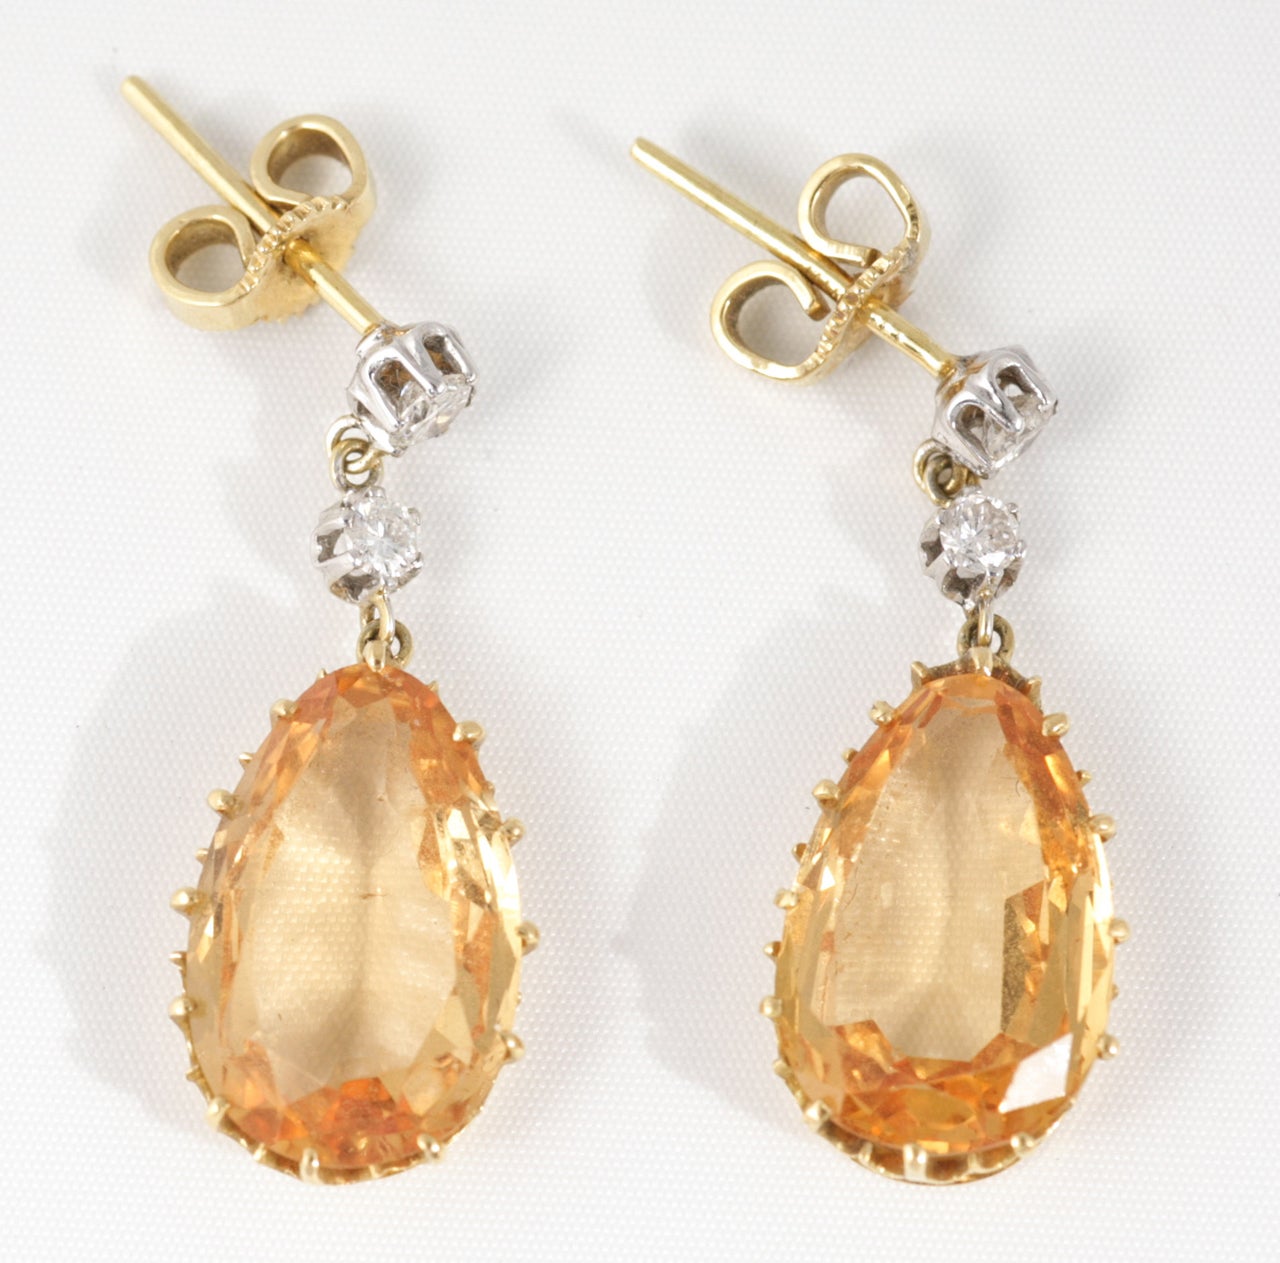 Edwardian Imperial Topaz drop earrings withDiamond tops, set in 18ct Gold